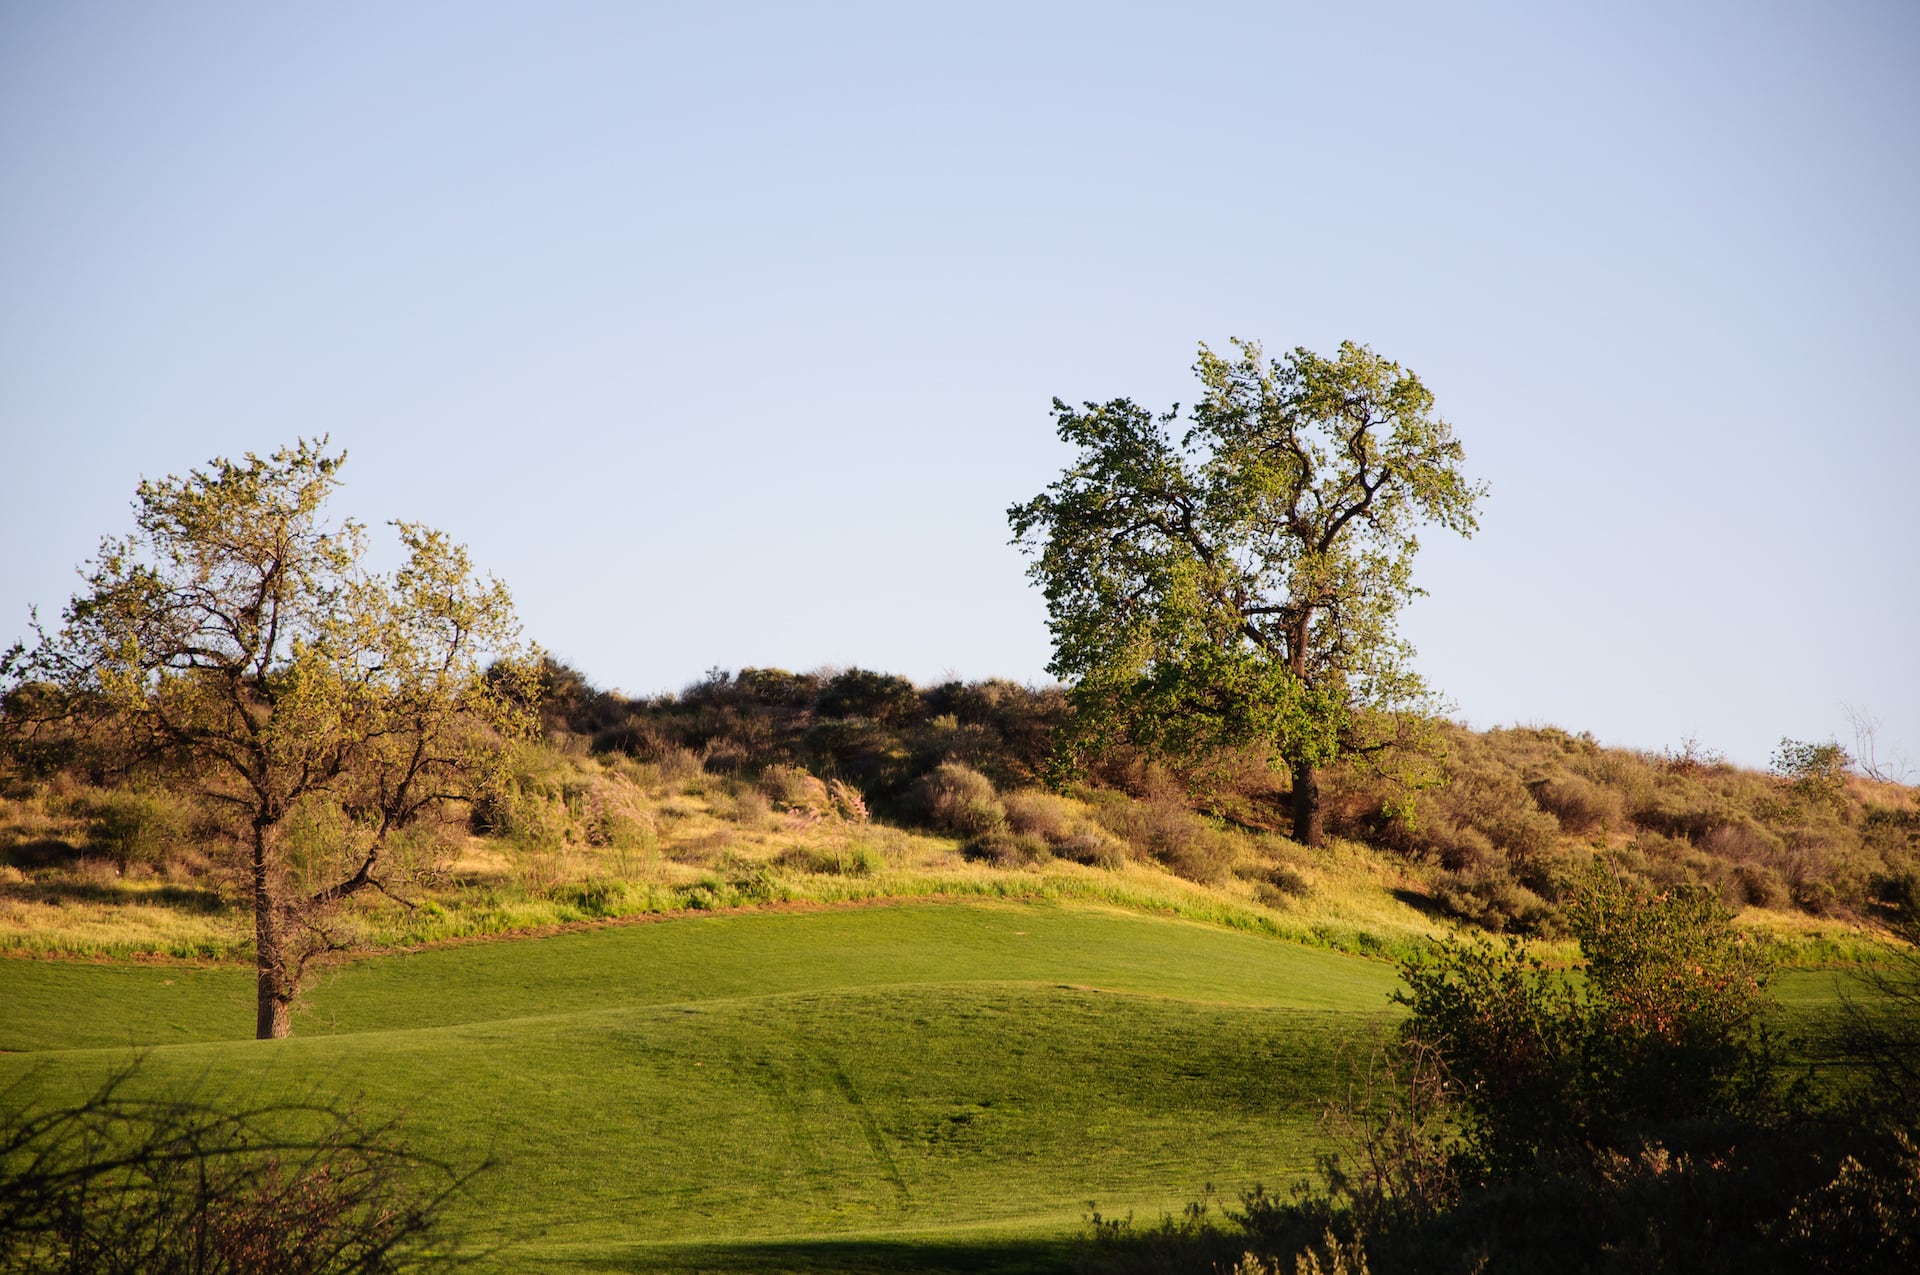 View of grass hill and trees in Santa Clarita, California